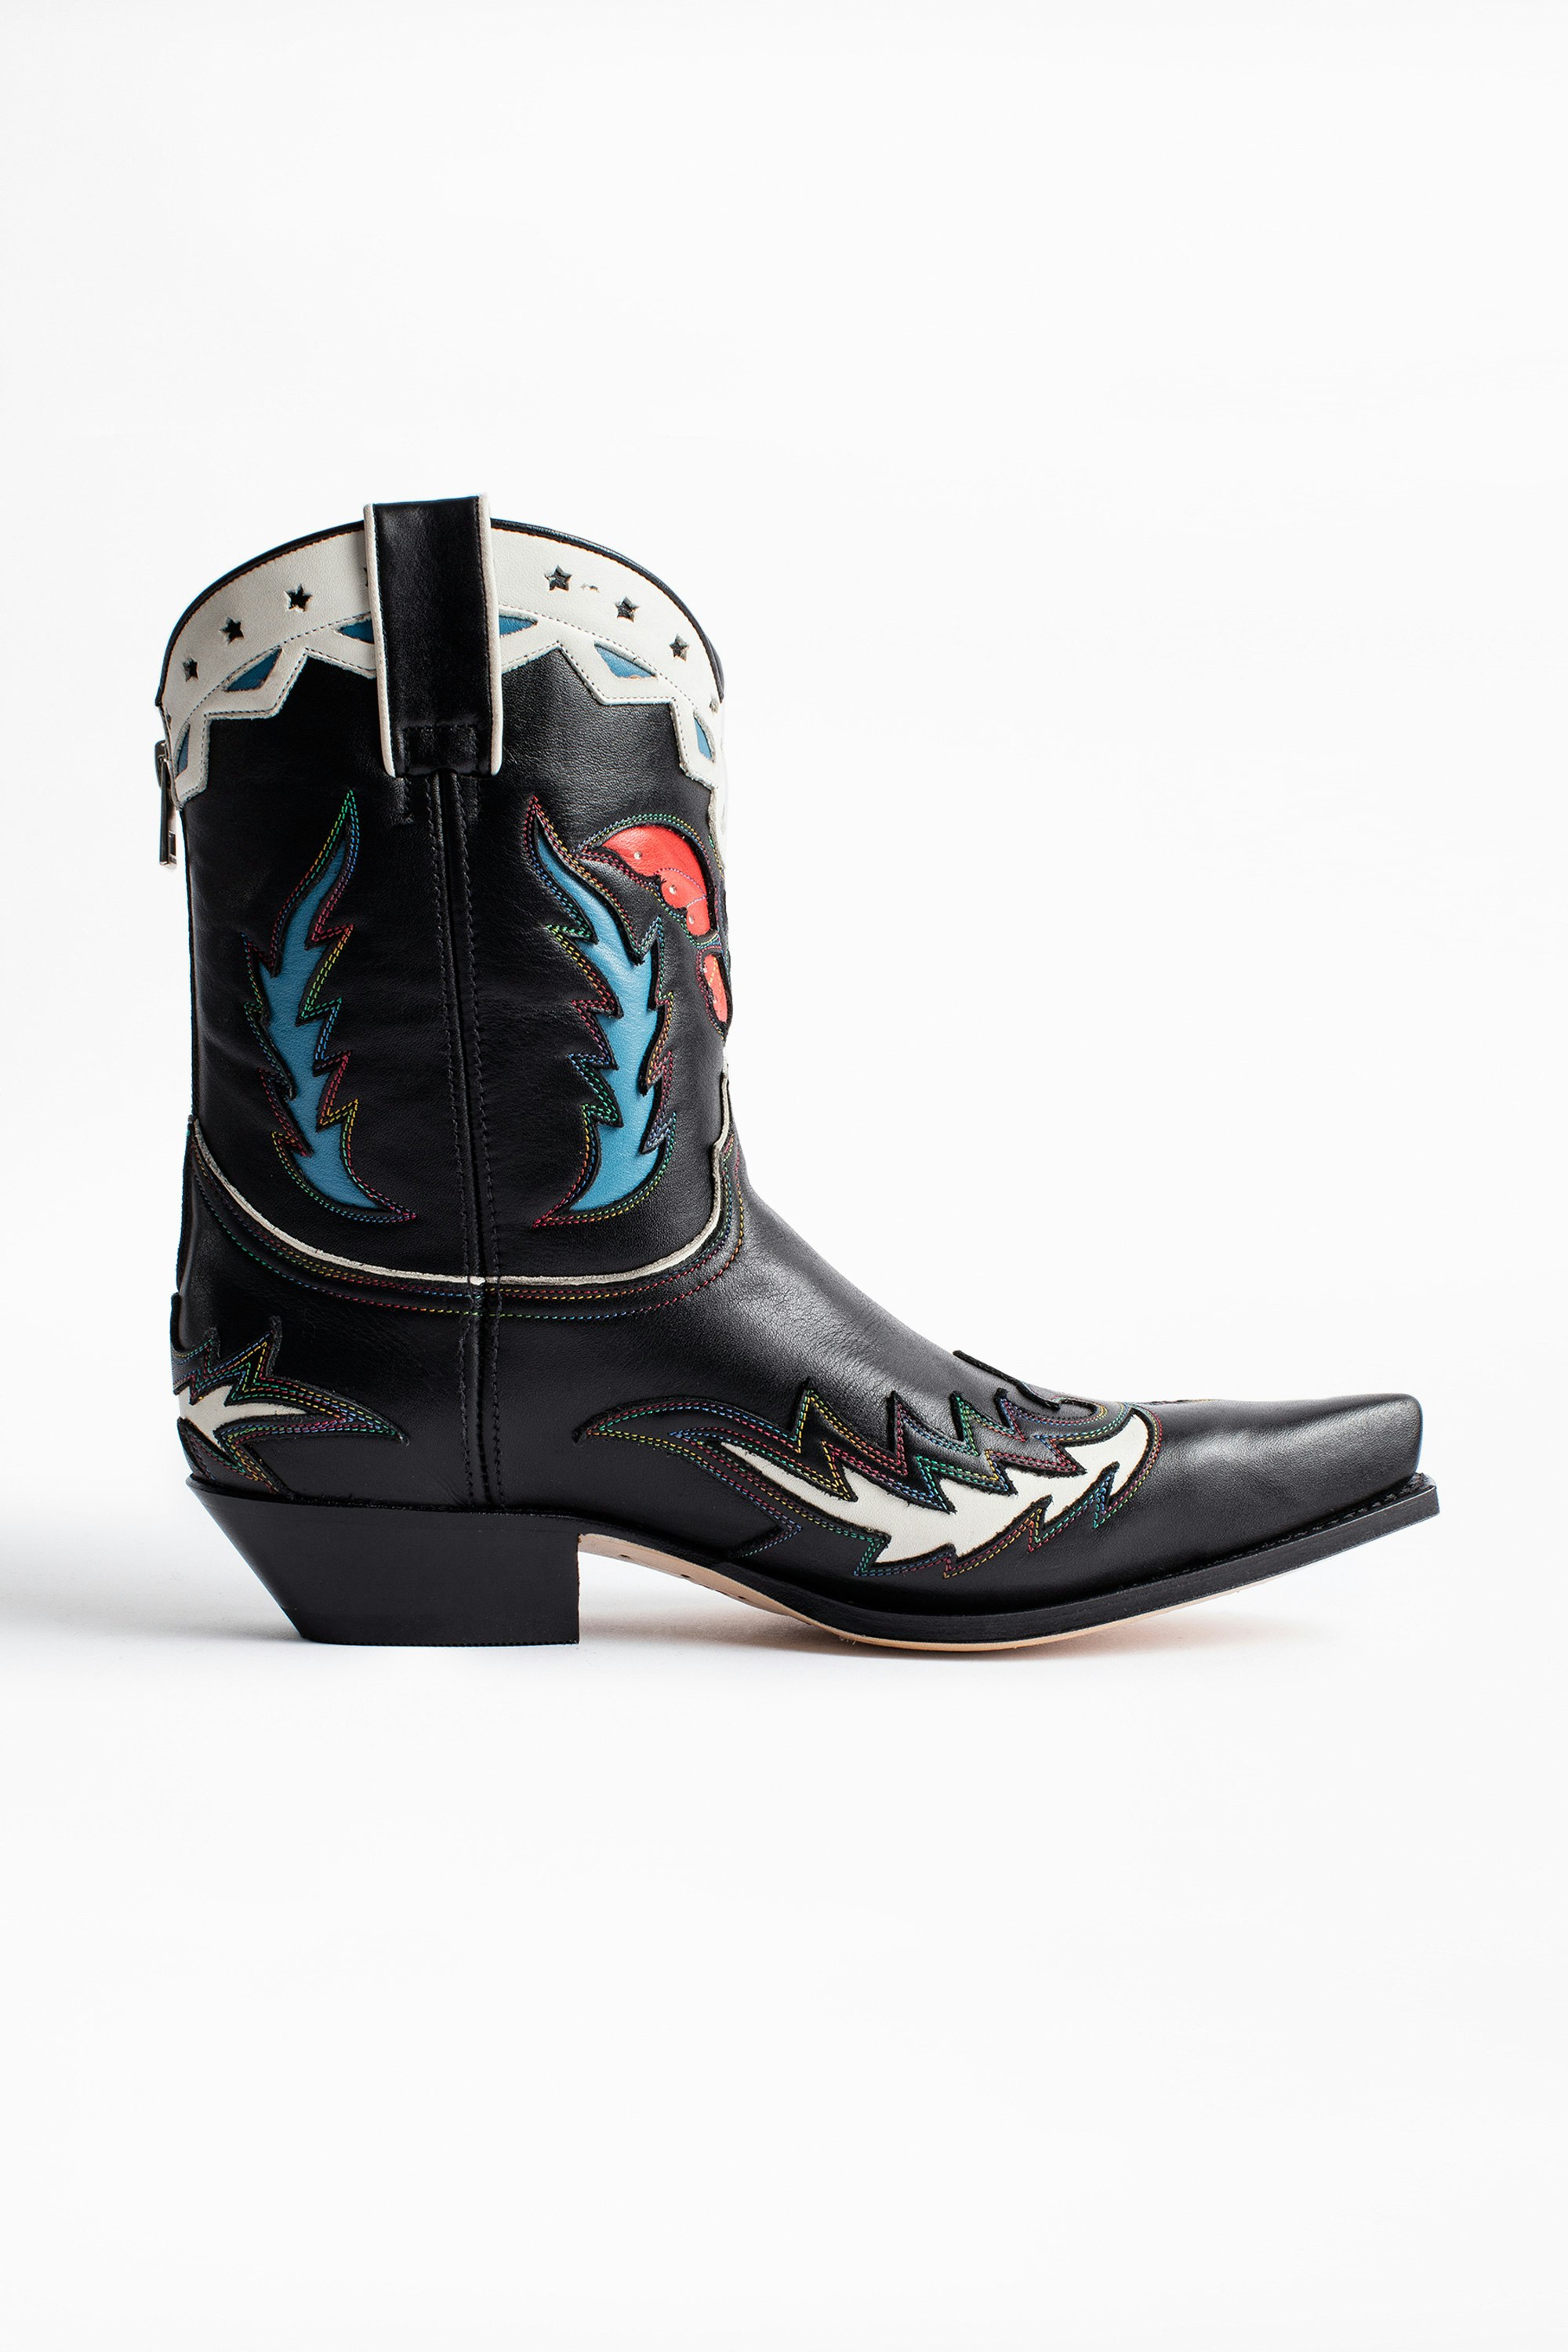 Sierra boots - boots women's | Zadig 